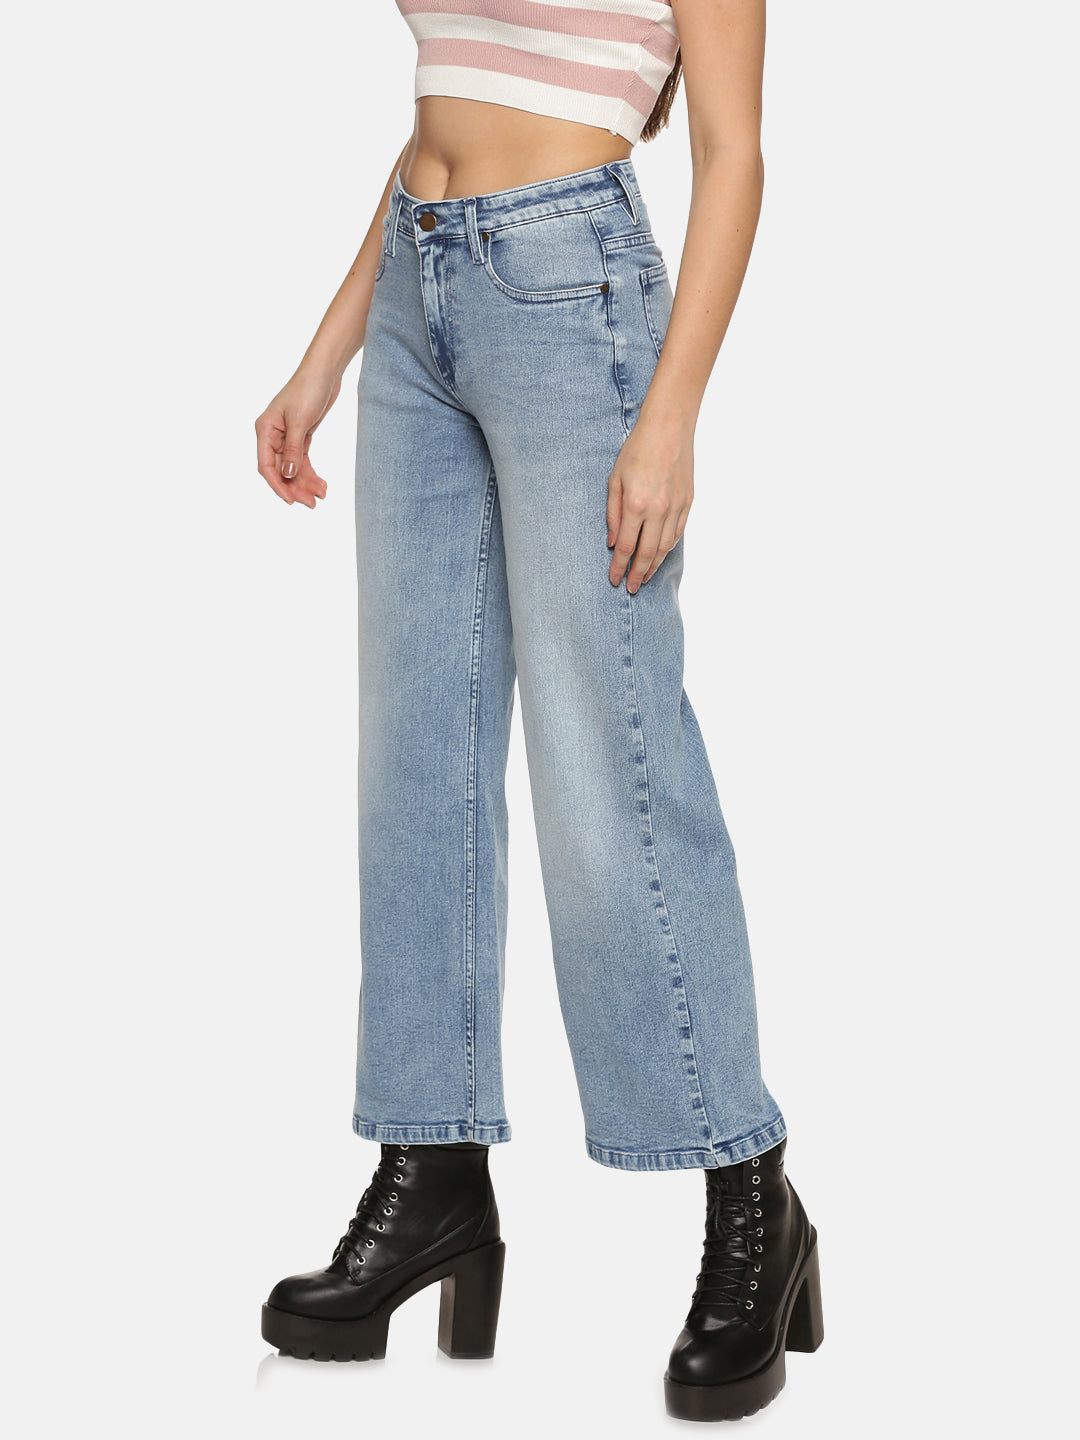 Buy Wide Leg Demin Jeans For ladies In Light Blue